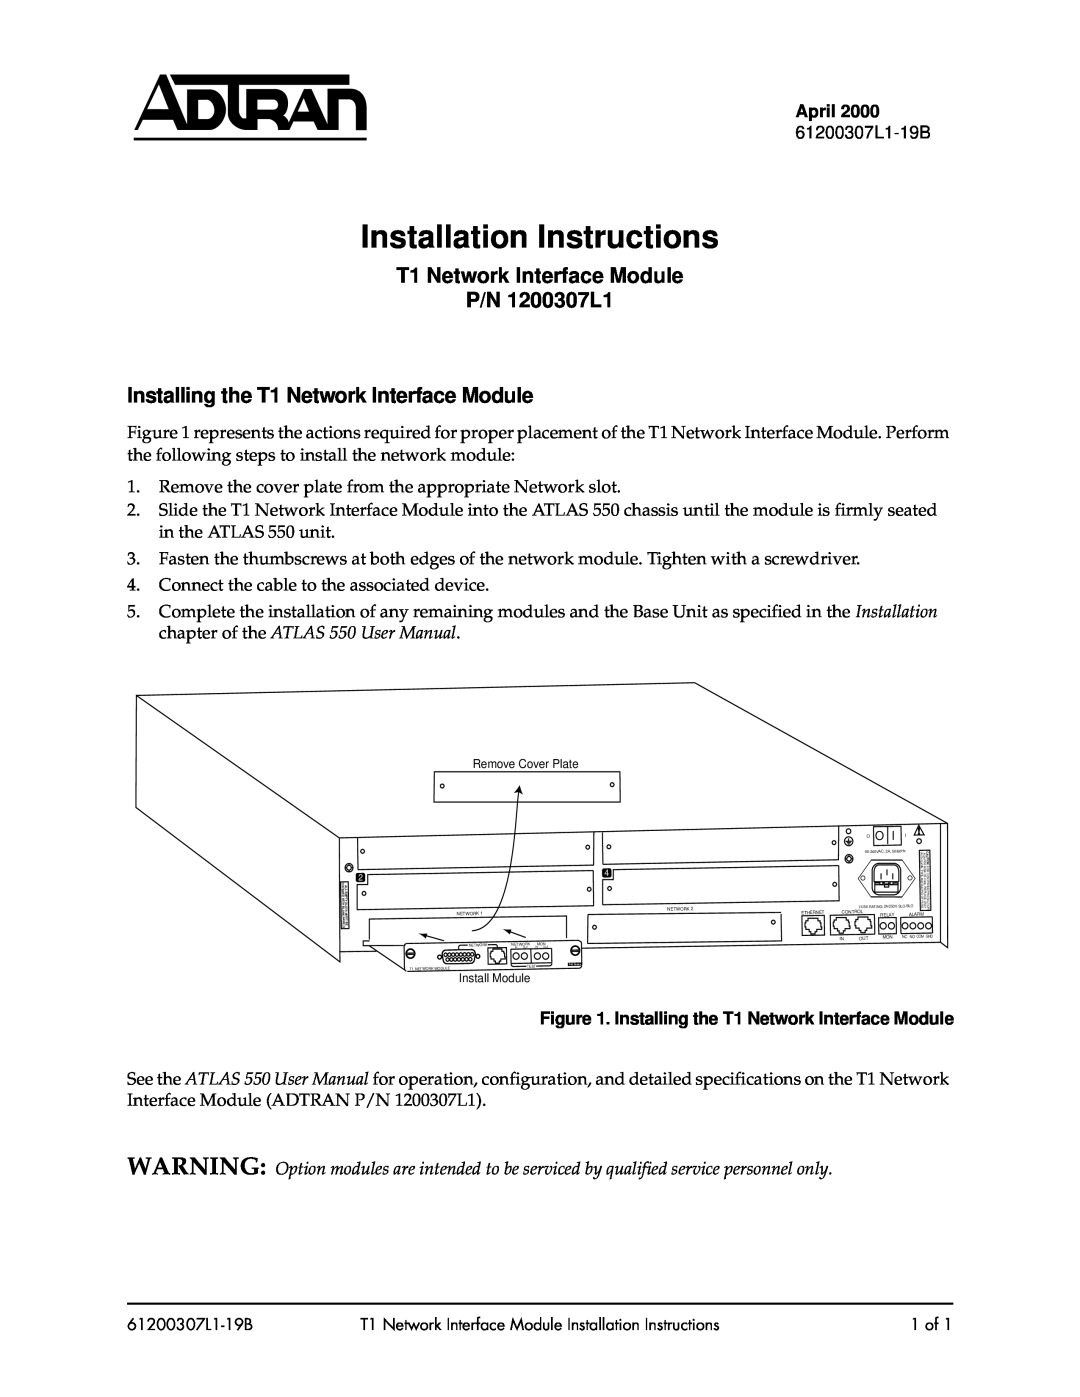 ADTRAN ATLAS 550 installation instructions Installation Instructions, T1 Network Interface Module P/N 1200307L1, April 